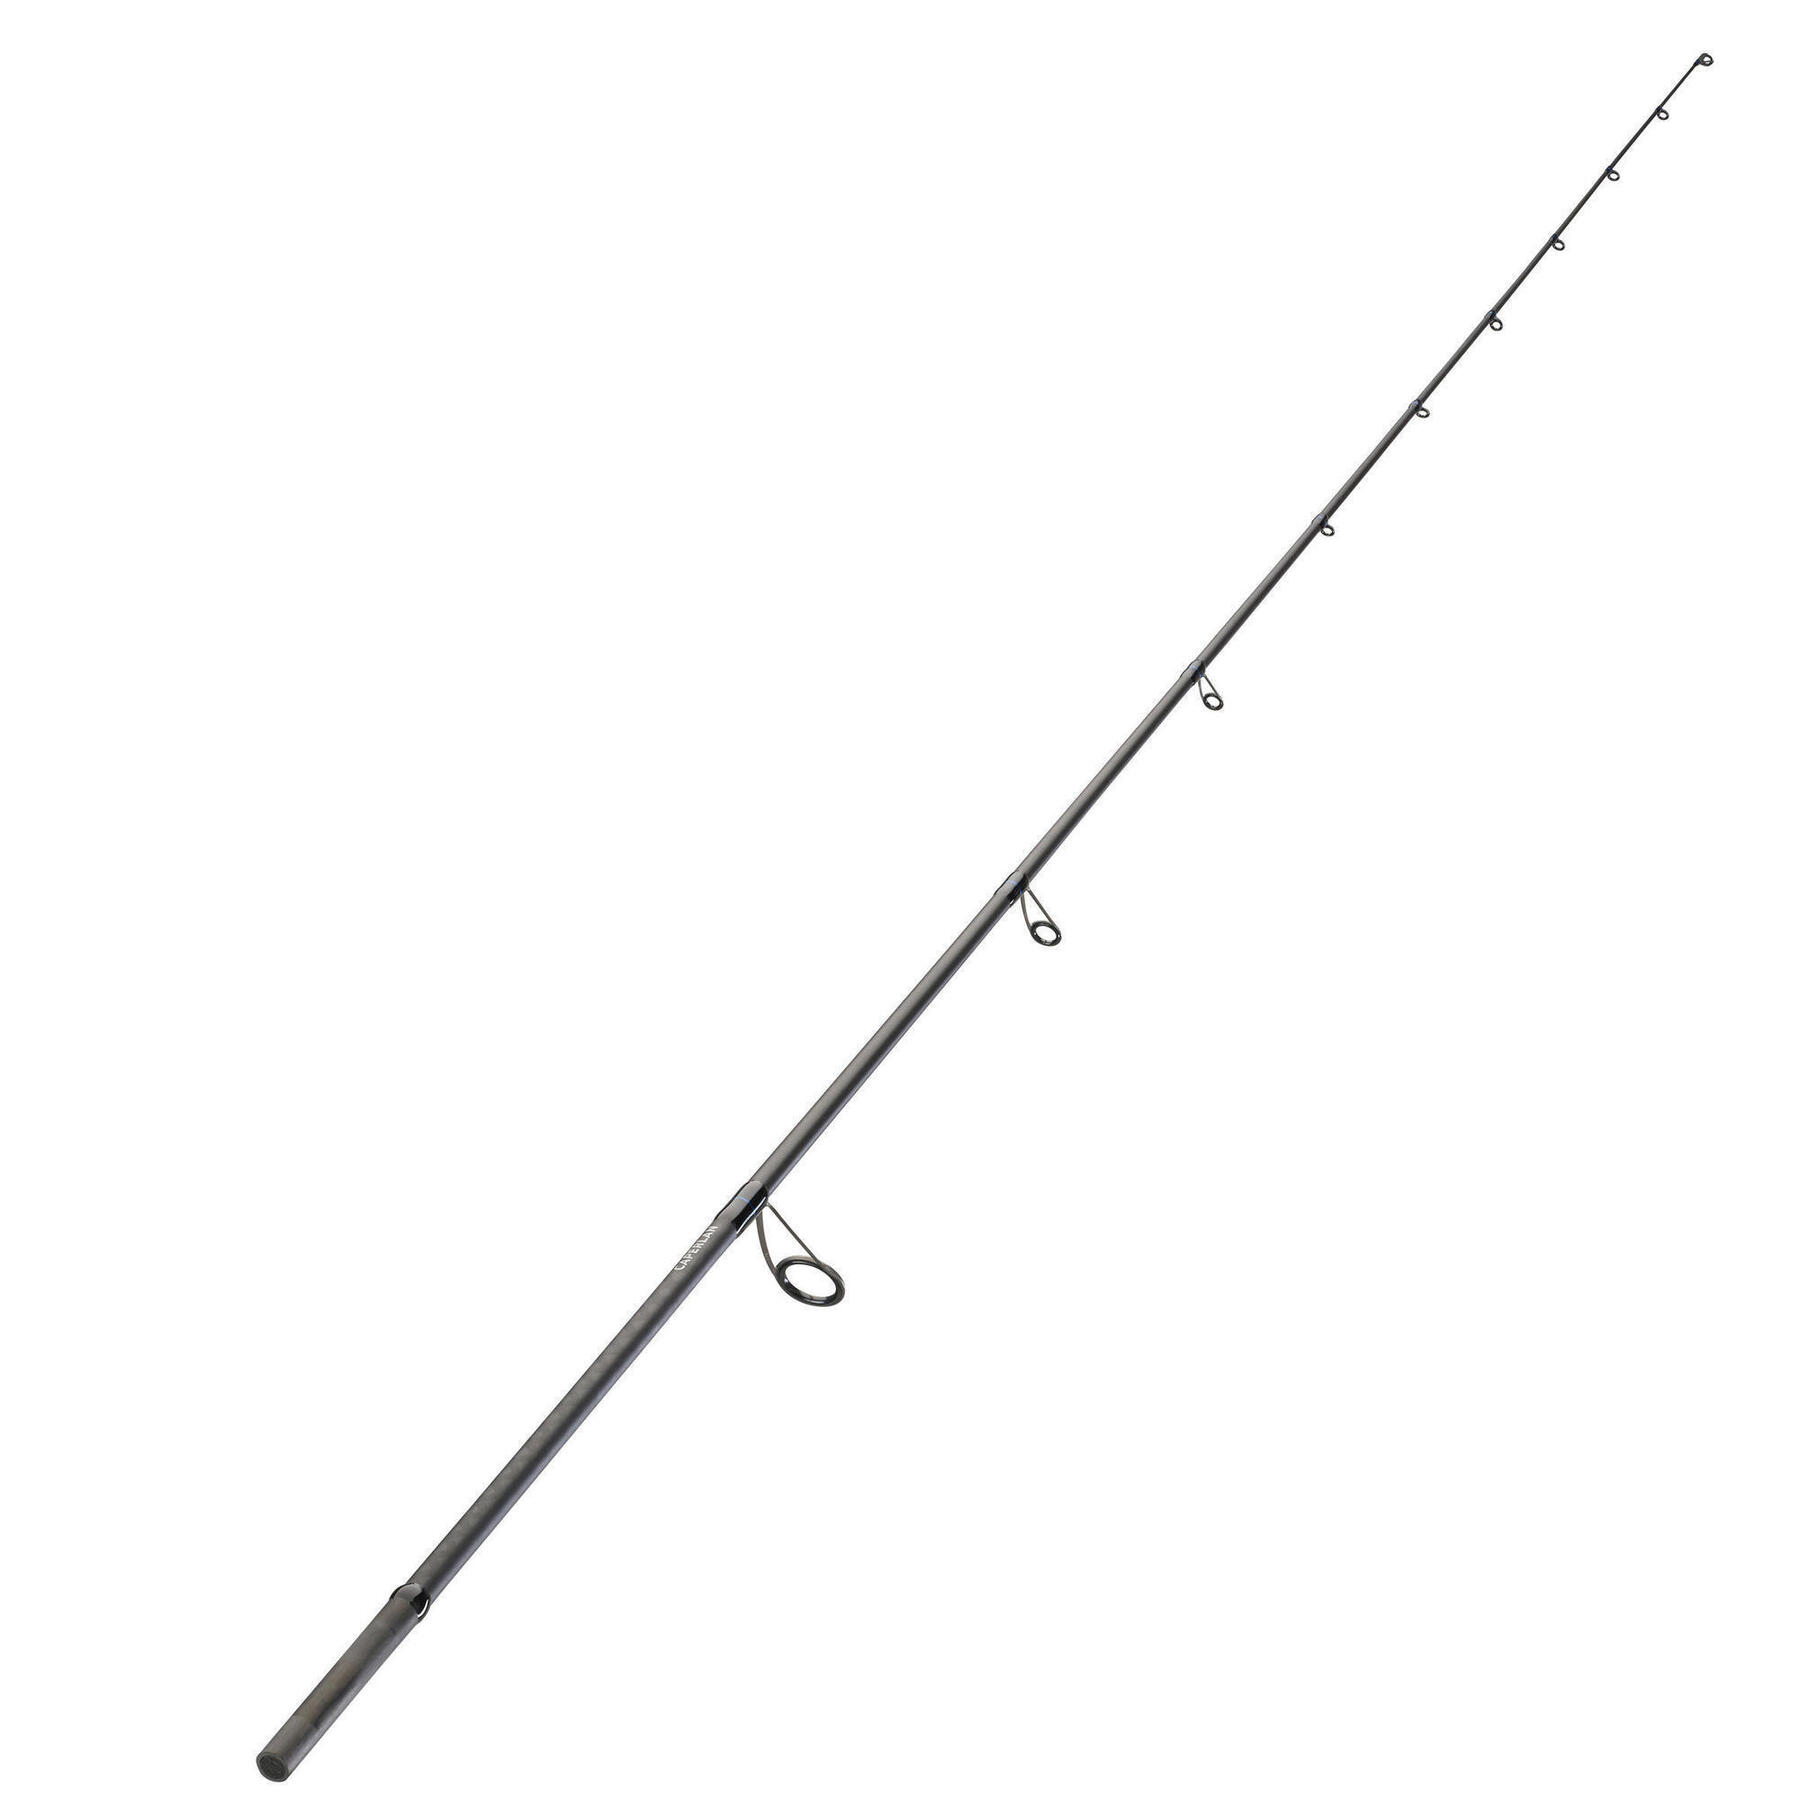 Sea lure fishing rod ILICIUM-100 230 10-40 g - Decathlon